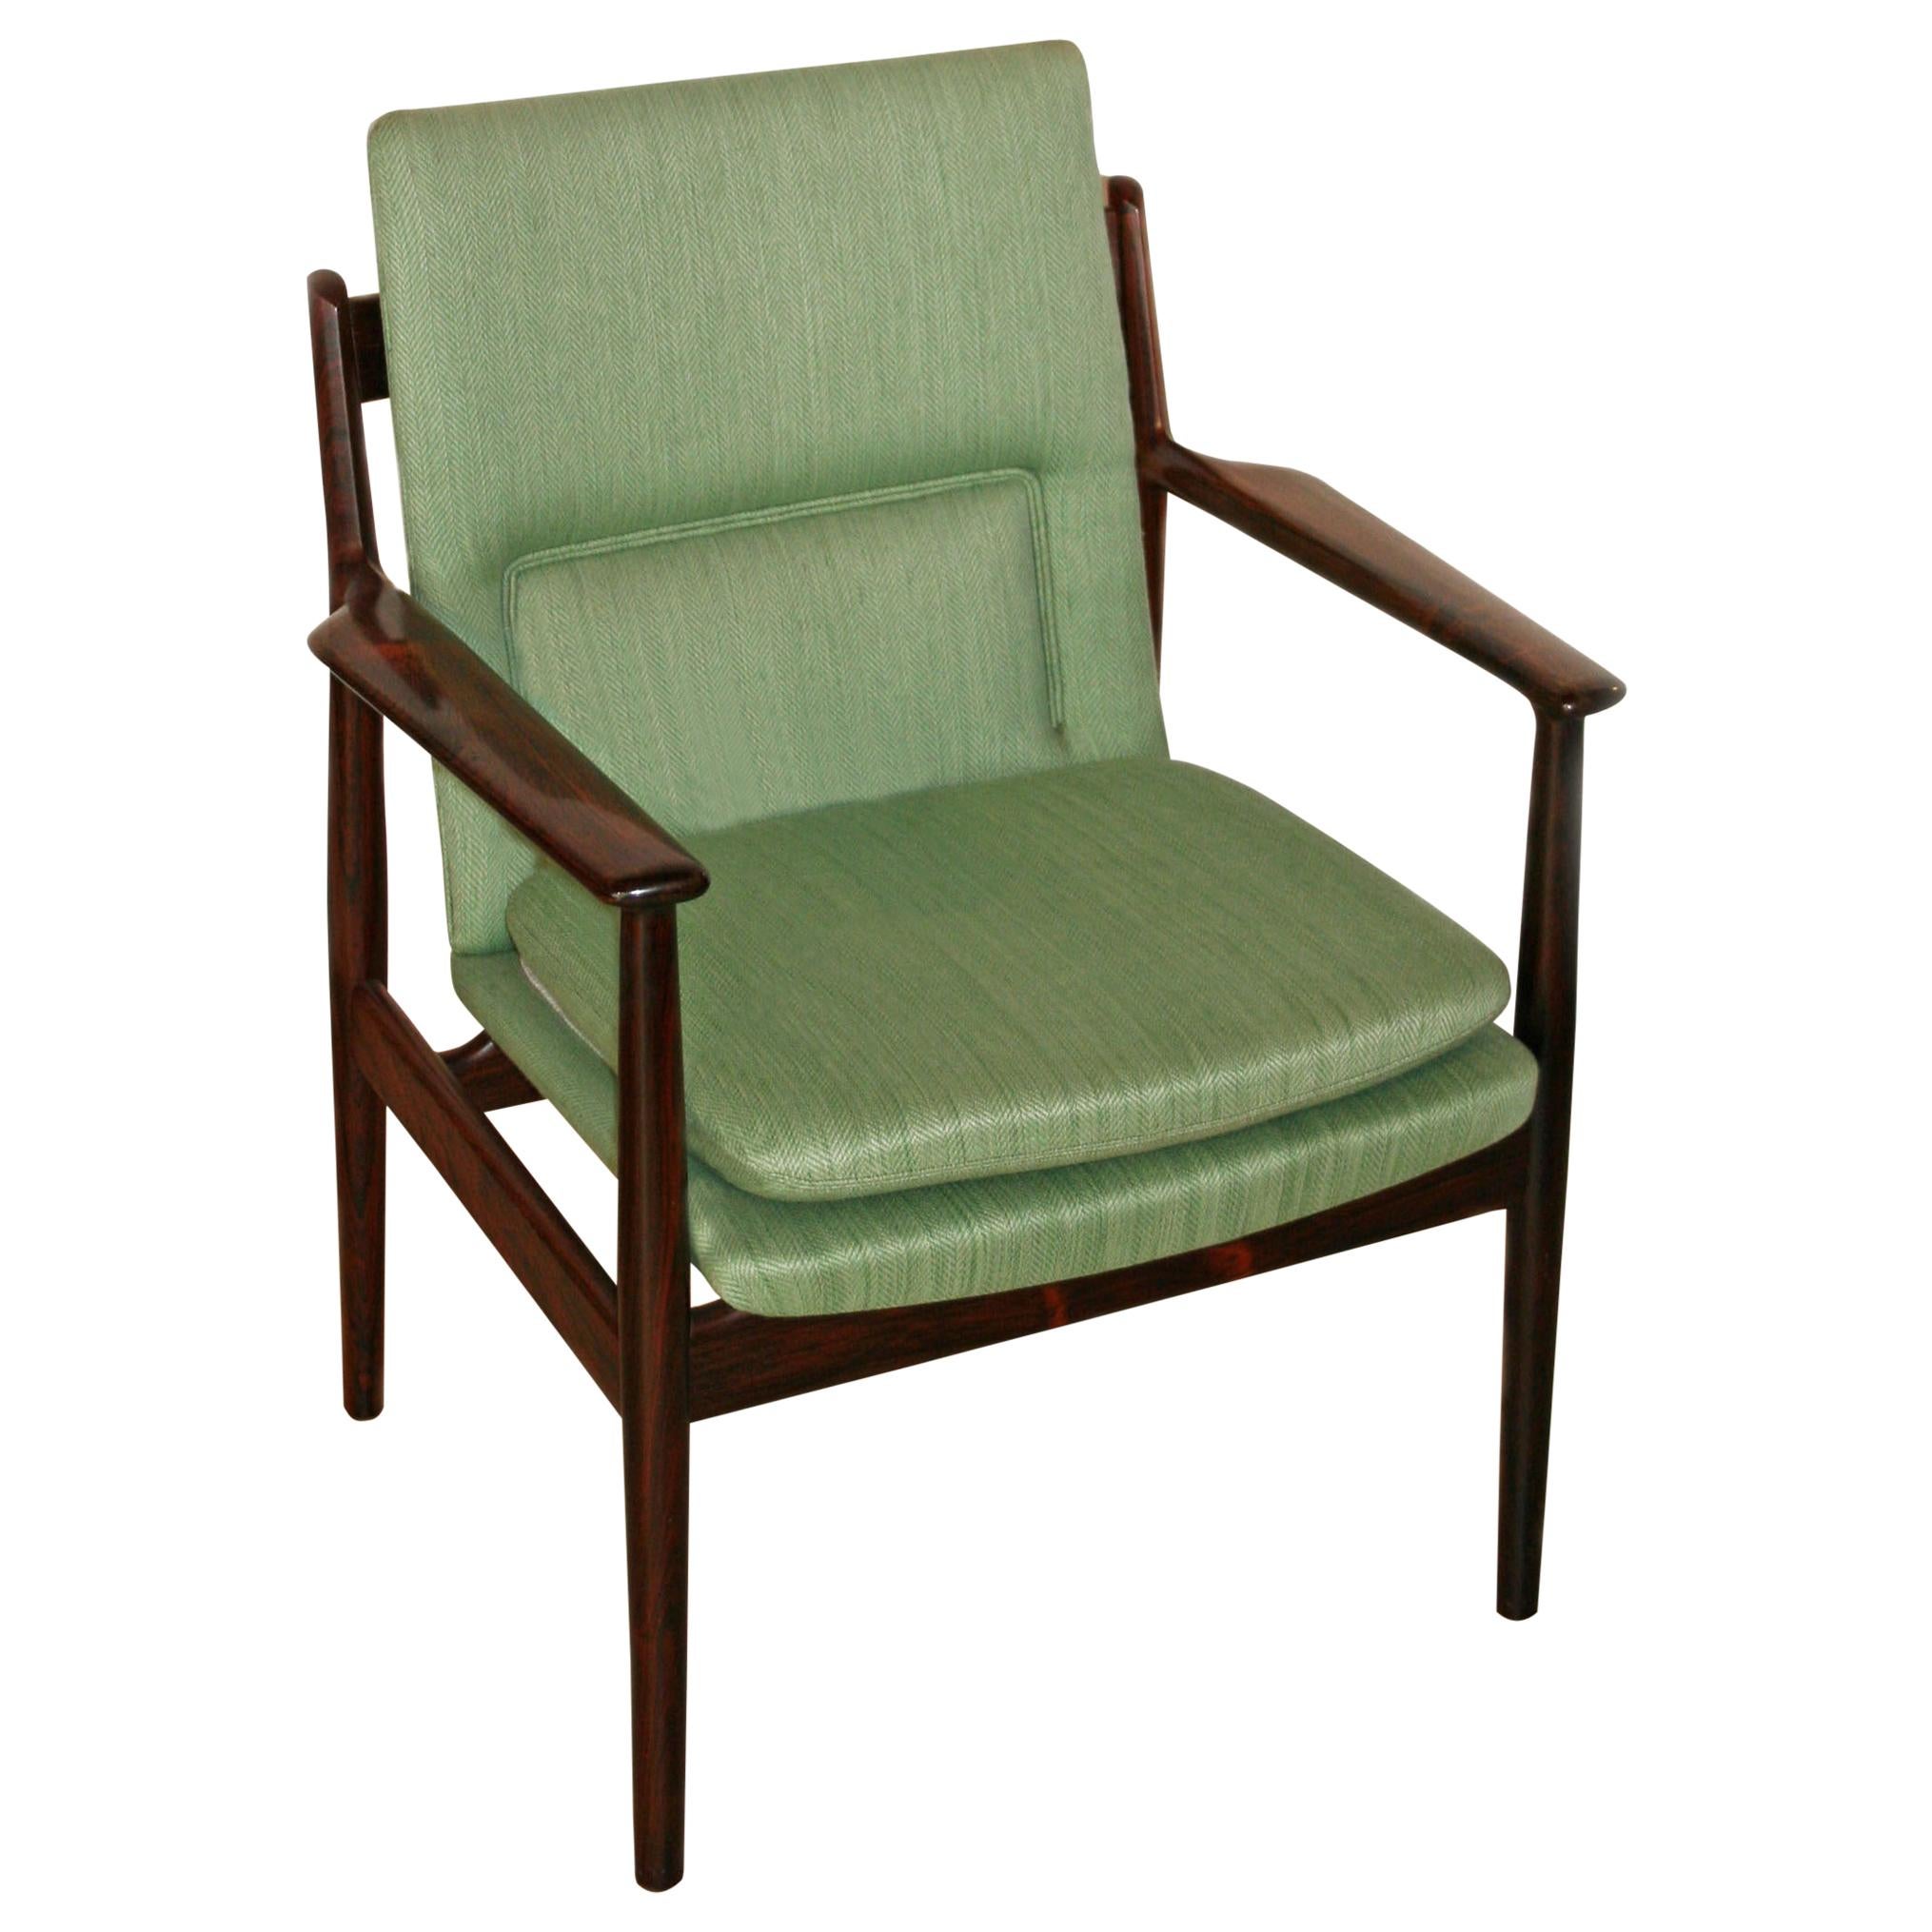 Arne Vodder Desk / Conference / Dining Chair Made by Sibast For Sale